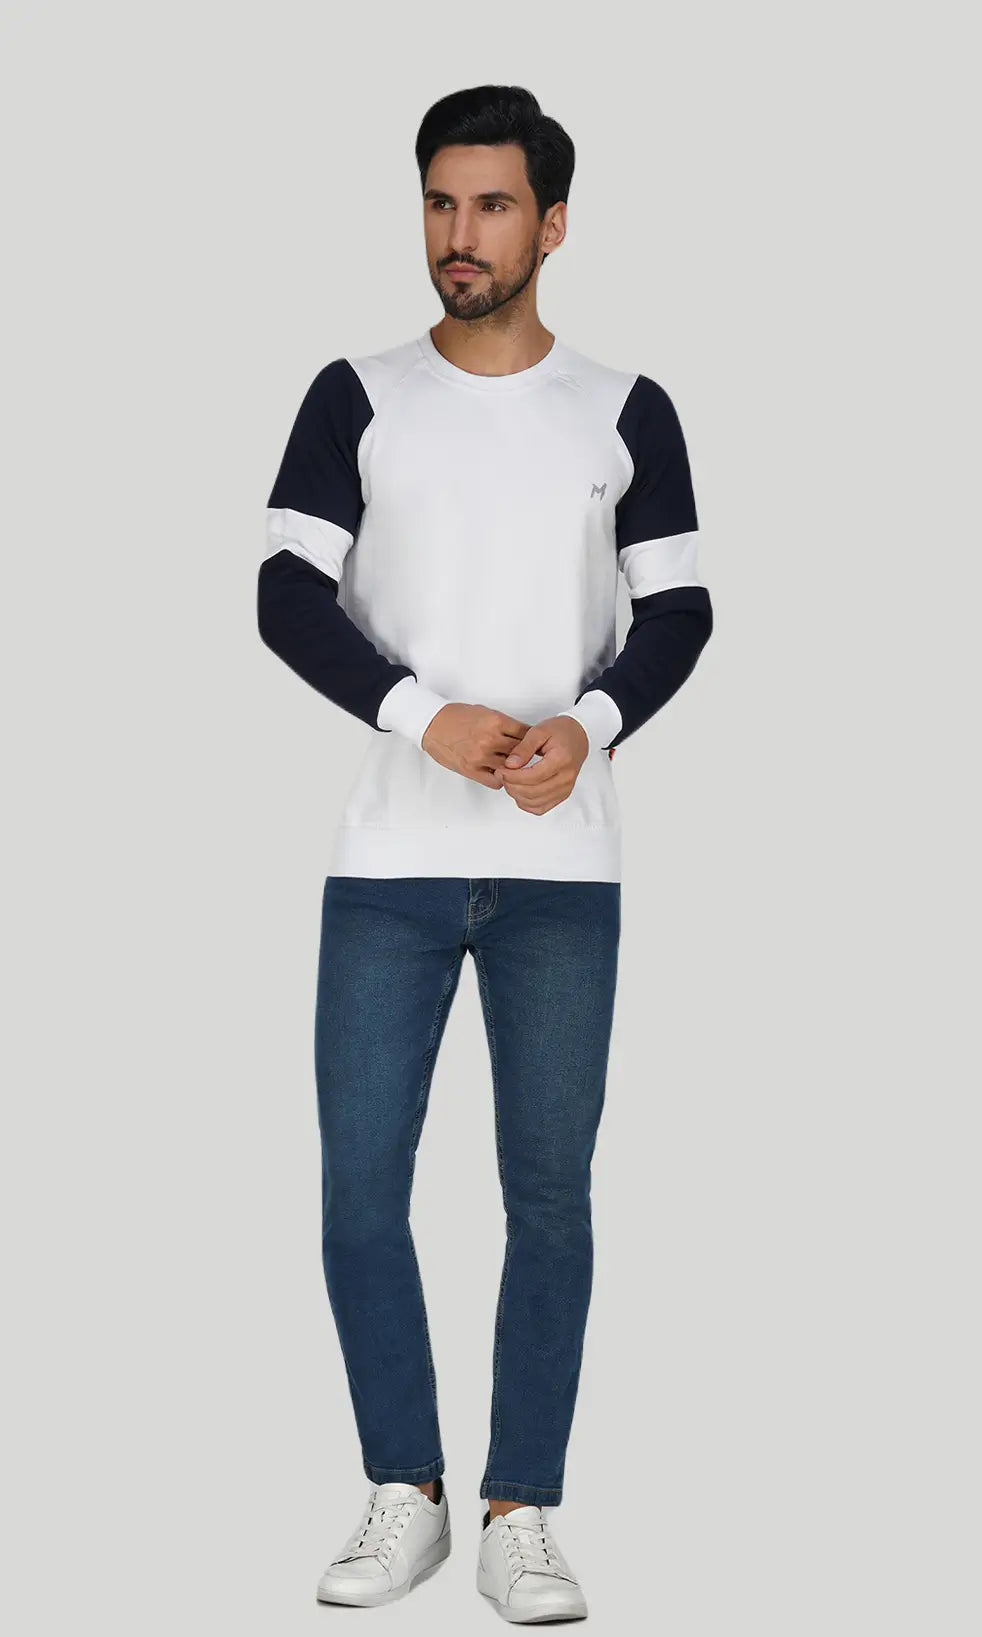 Mebadass Cotton Men's Winterwear ColorBlocked Sweatshirt - White Navy Arm